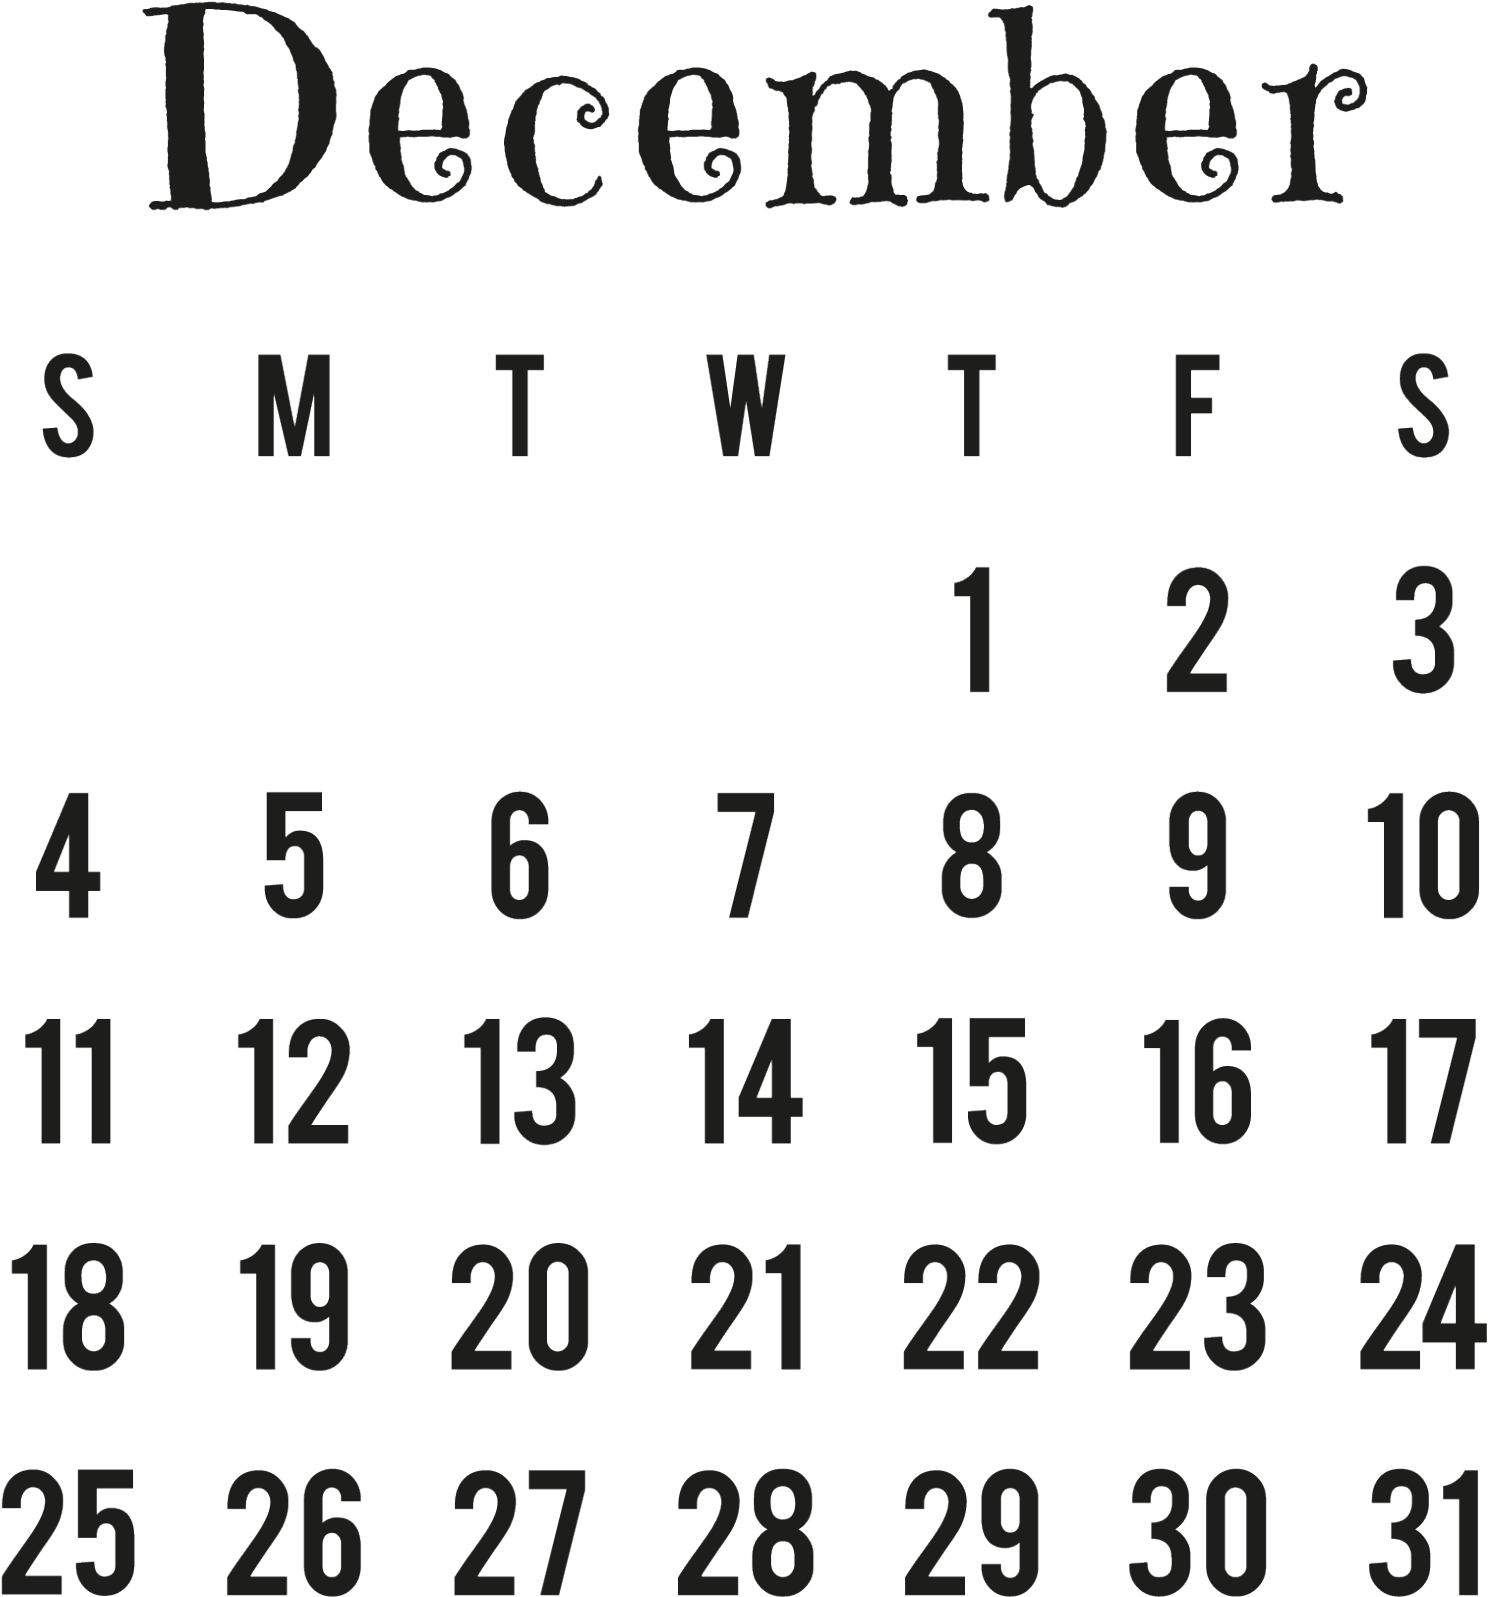 Png Calendar - December 2016 Calendar Png (2048x2048), Png Download